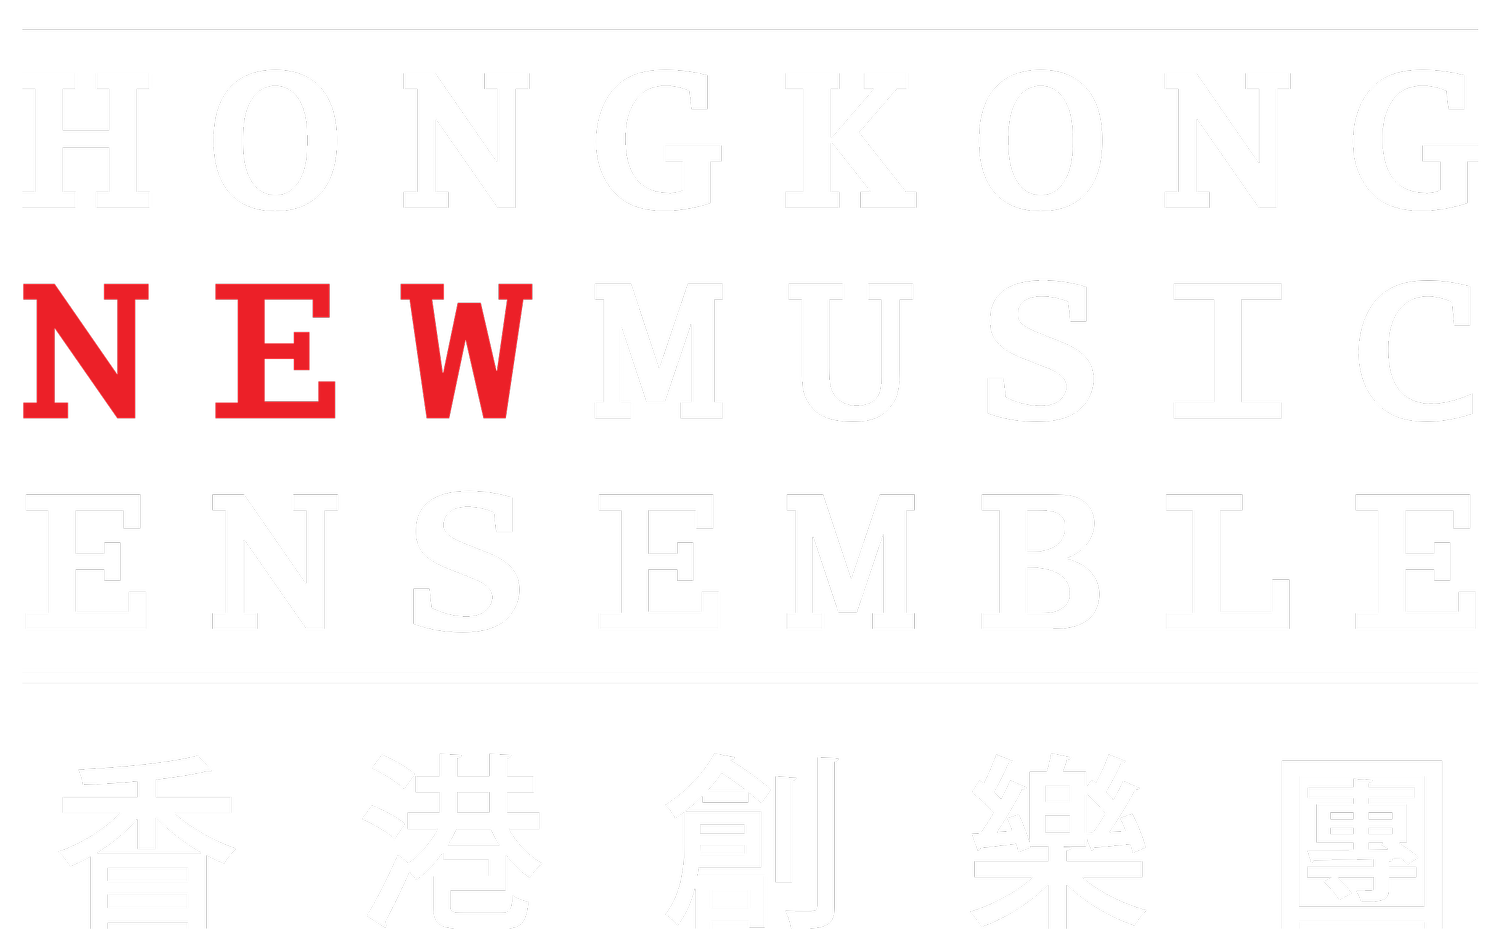 HONG KONG NEW MUSIC ENSEMBLE